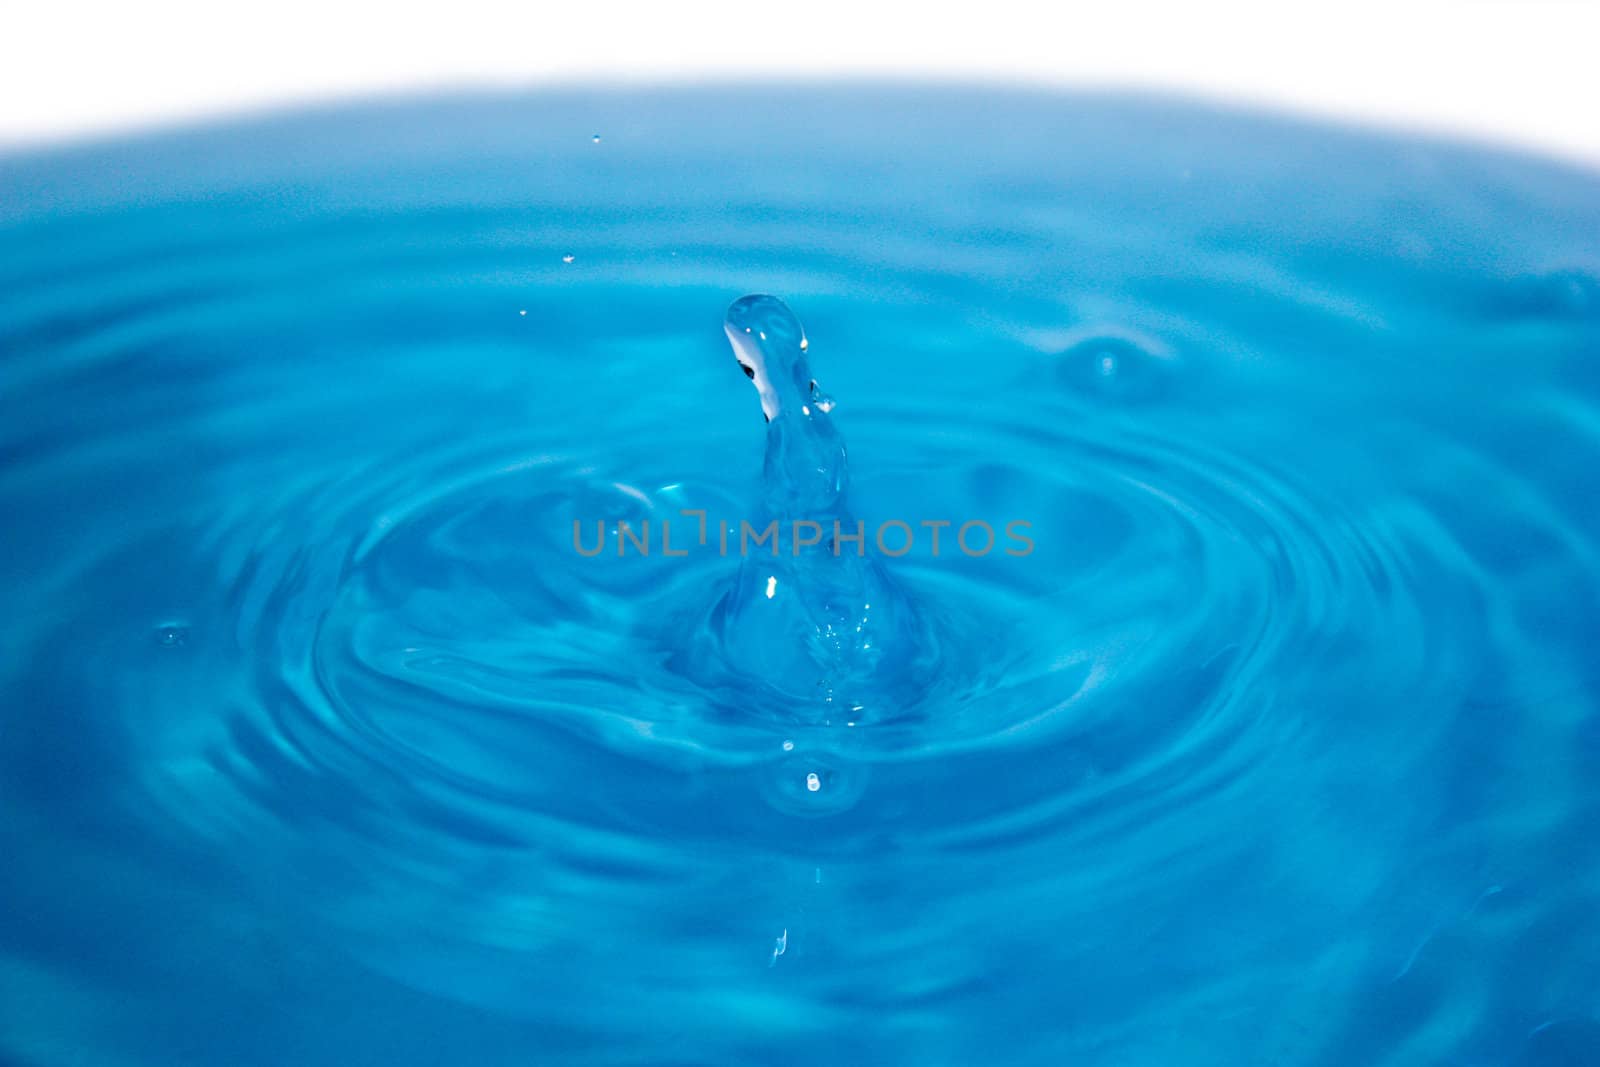 Blue water, water drop, clean water, waves on water, ripples, water dripping, fluid